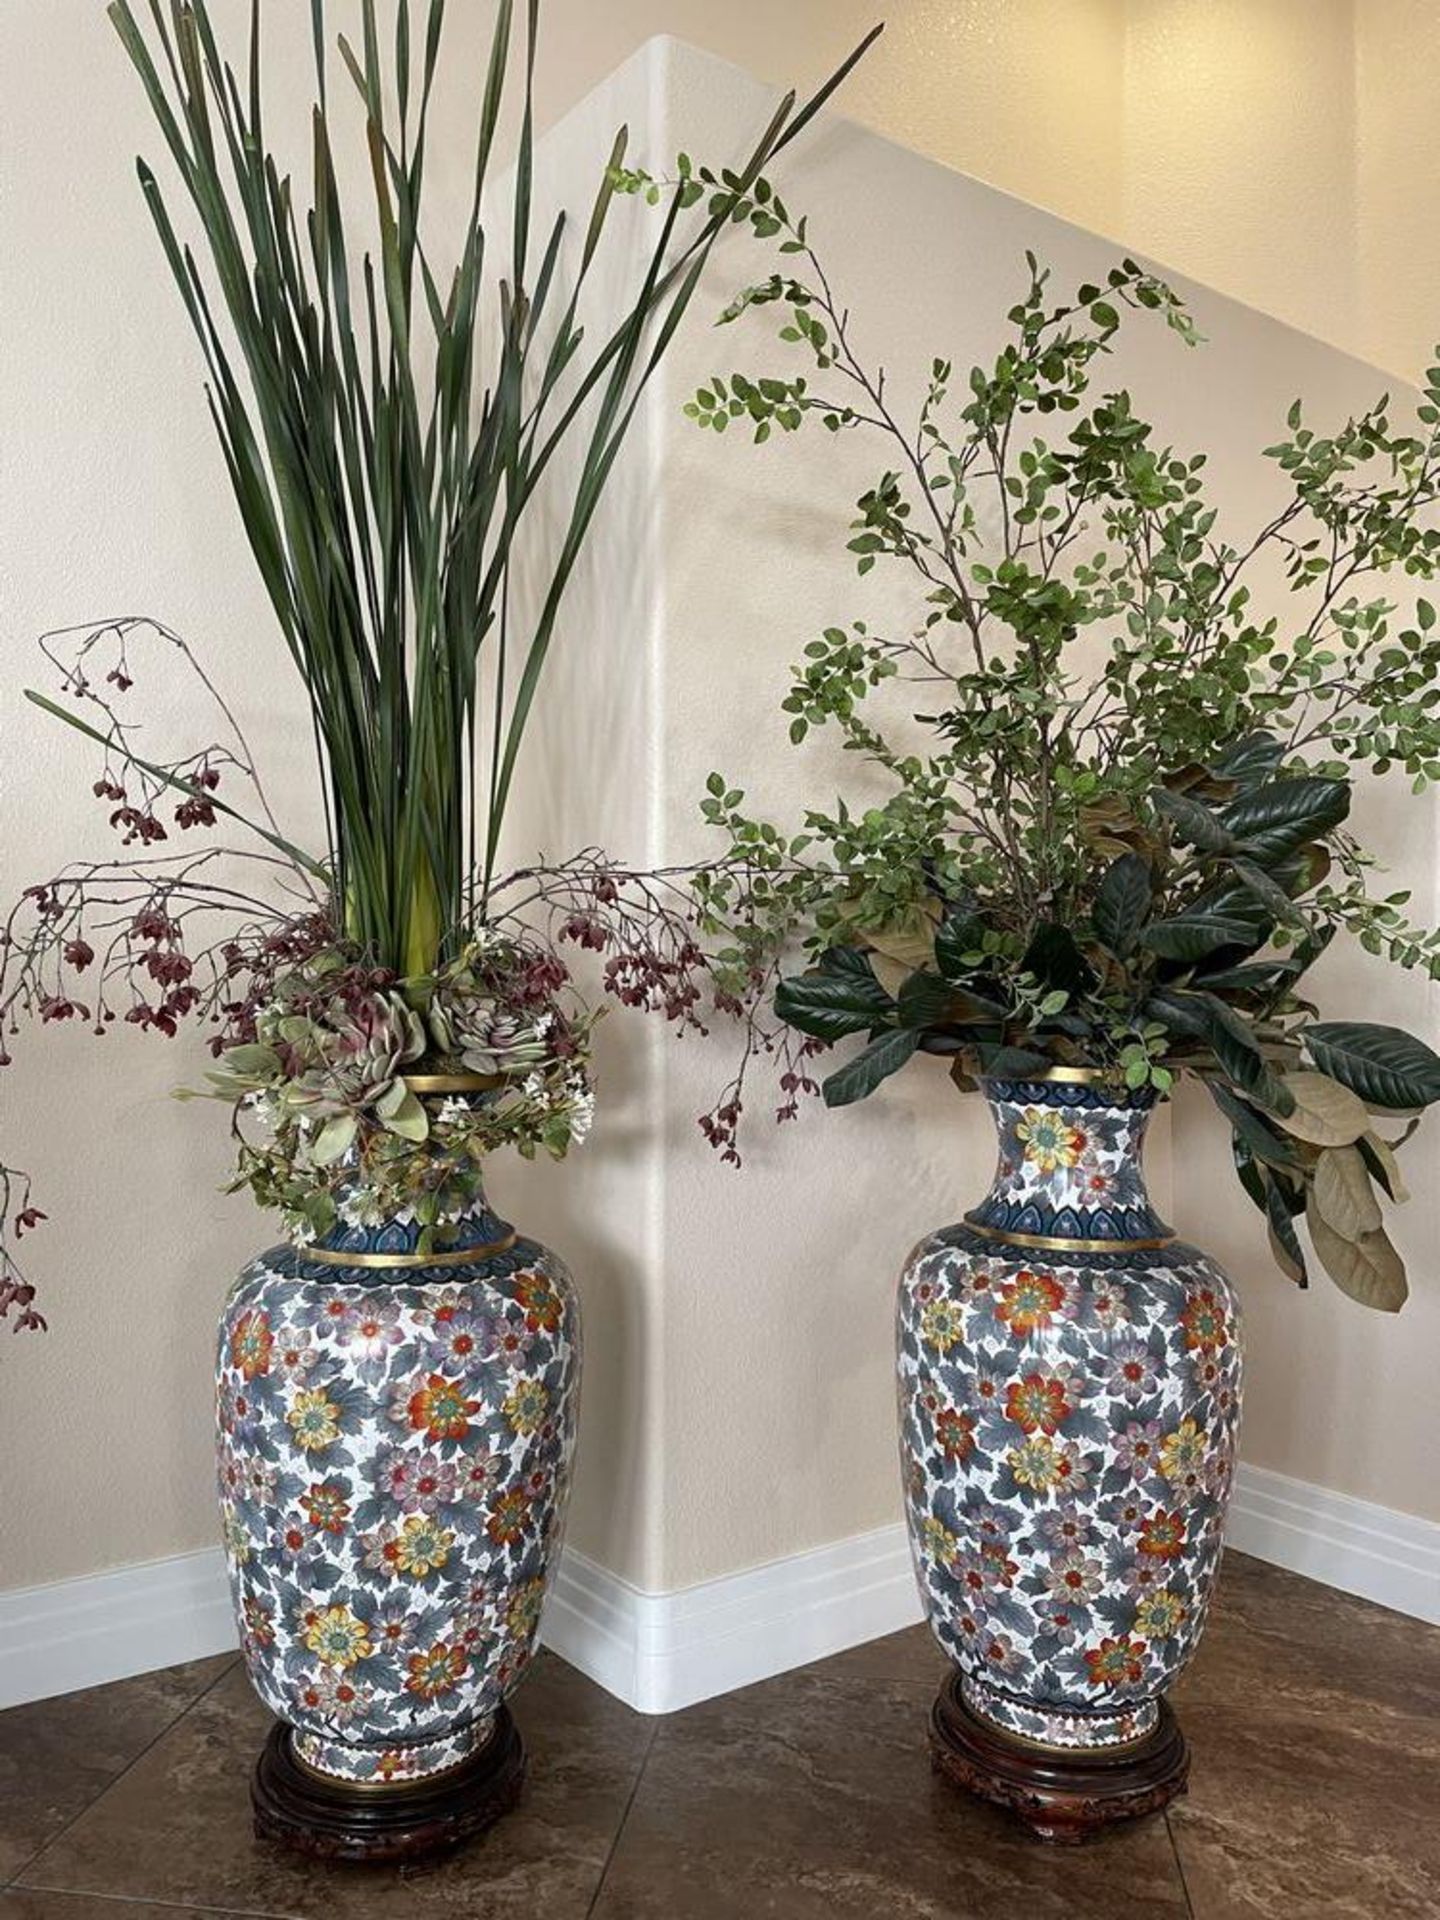 2 Large Antique East Asian Urn Vases w/ gold metal trim & enamal, removable artificial plants, Base